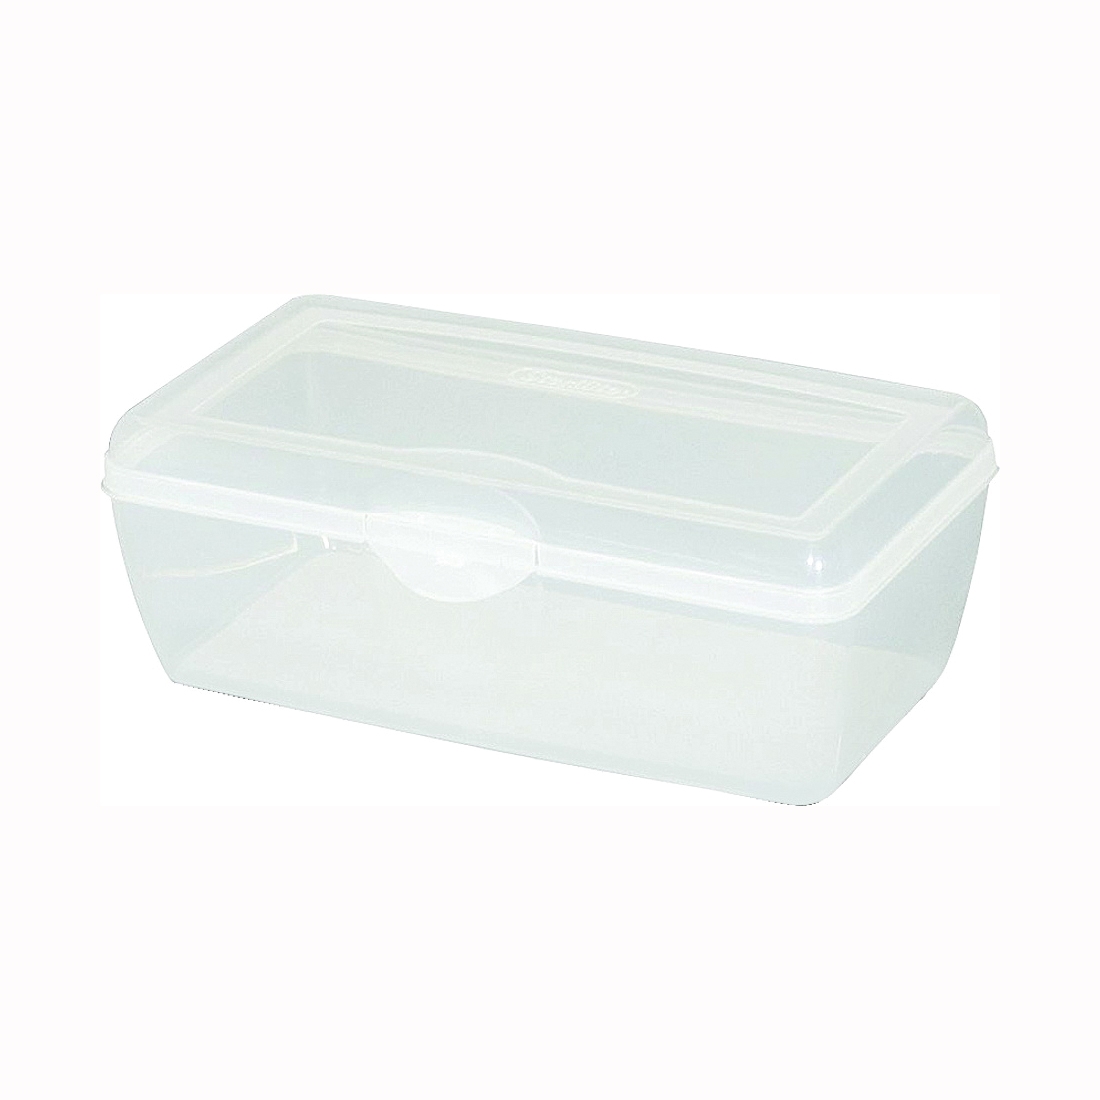 Sterilite Ultra-Seal Container, Clear, 8.1 Quart